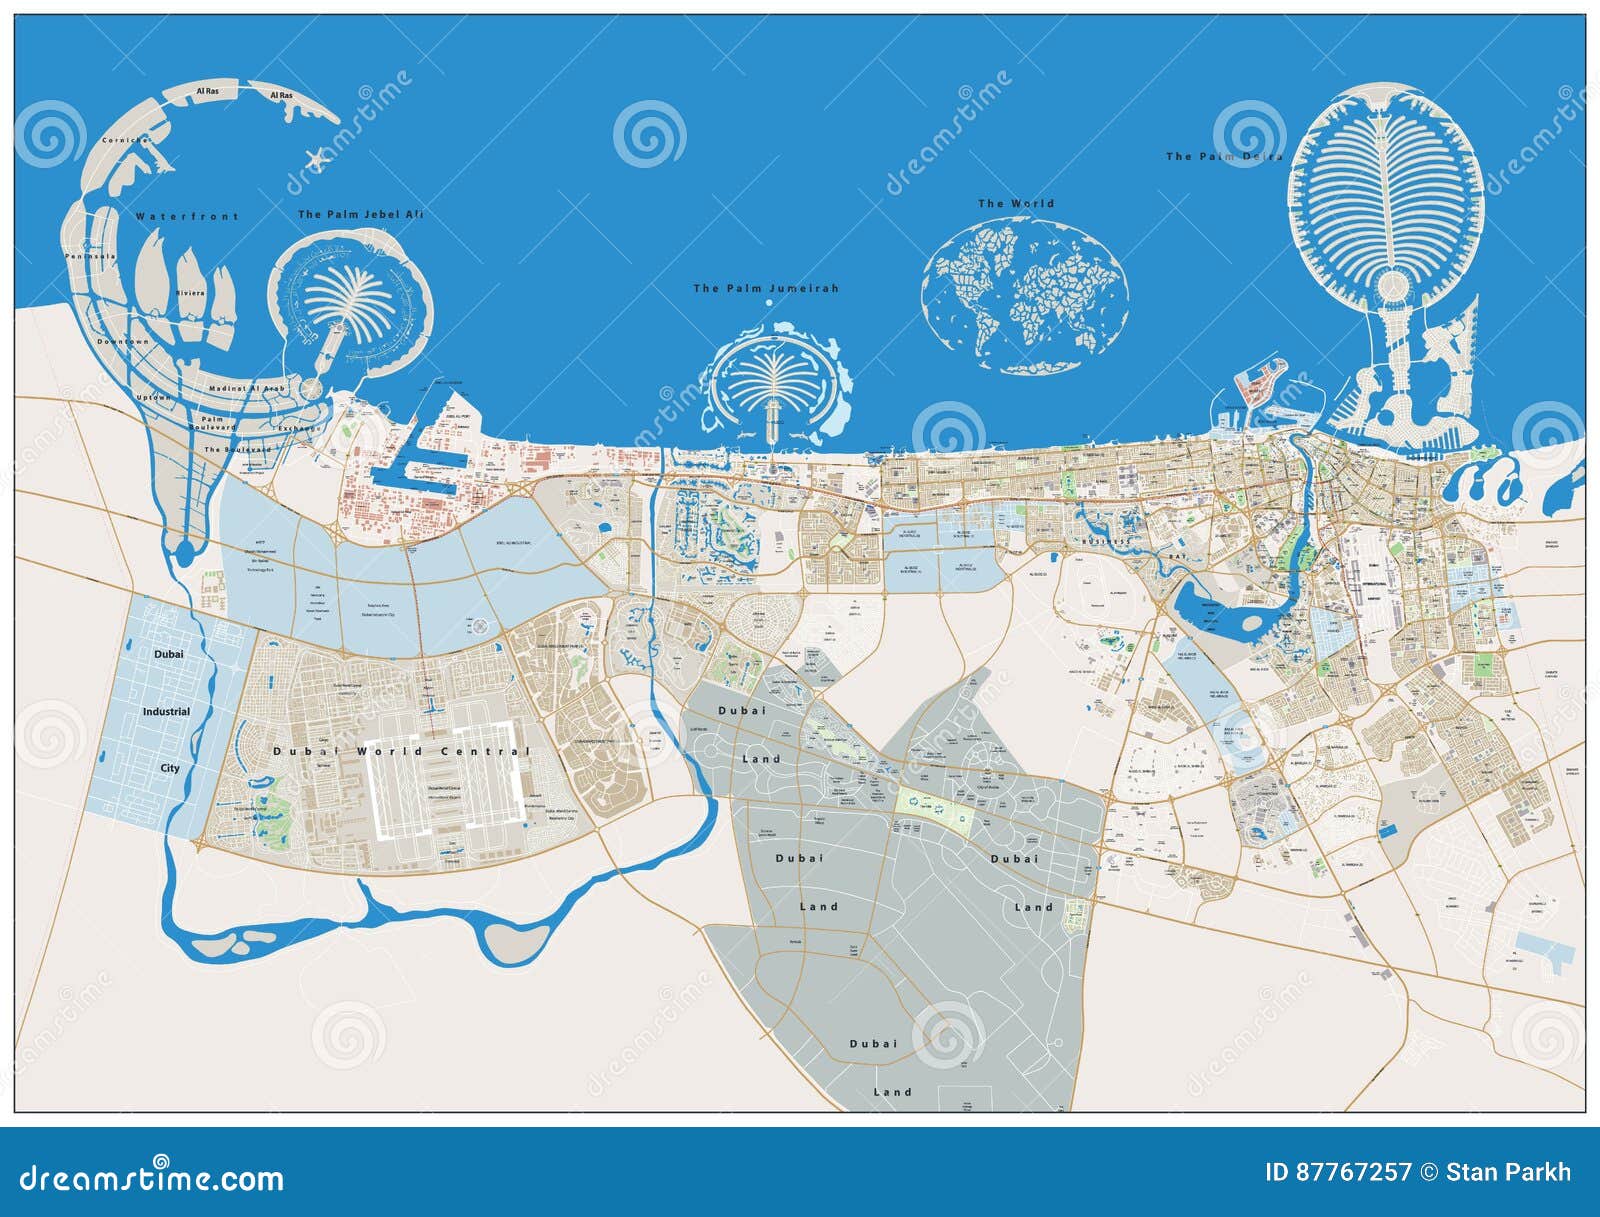 dubai large city map